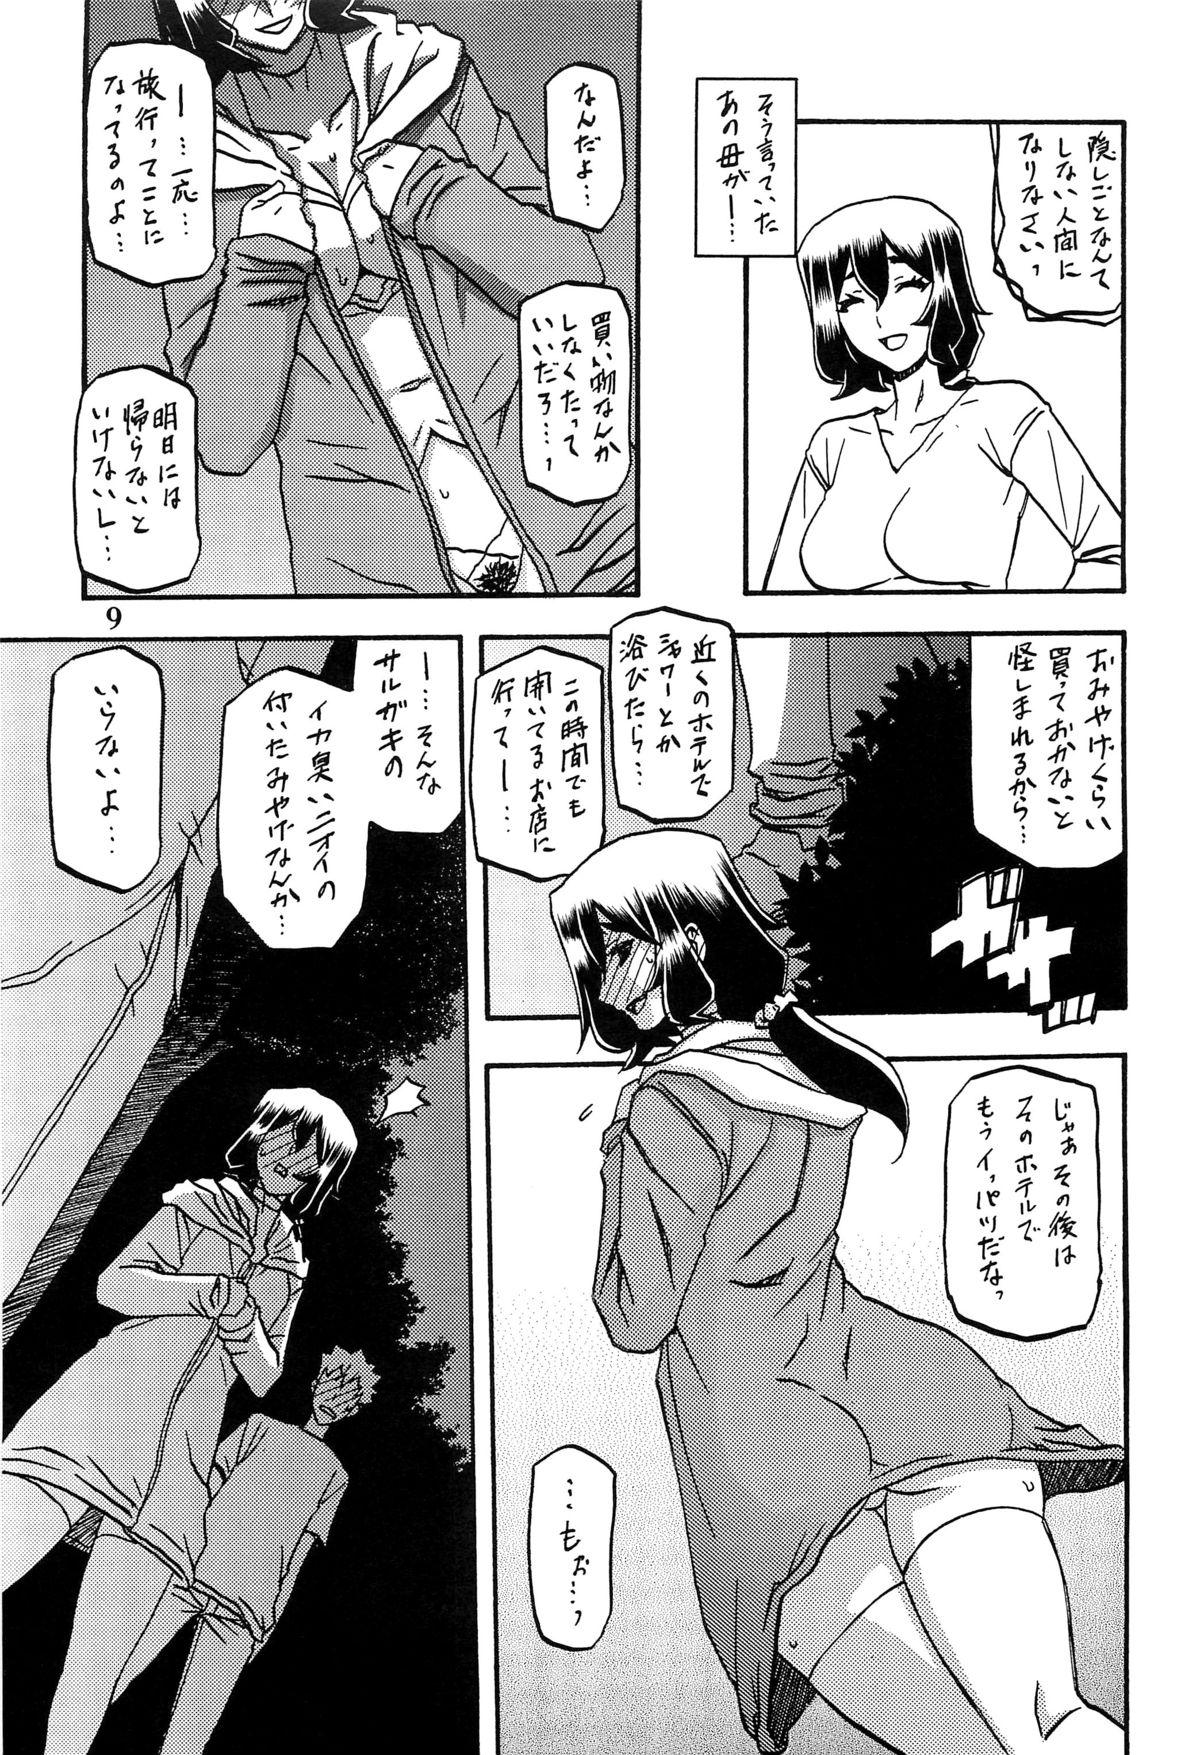 Cunt Akebi no Mi - Chizuru AFTER With - Page 8